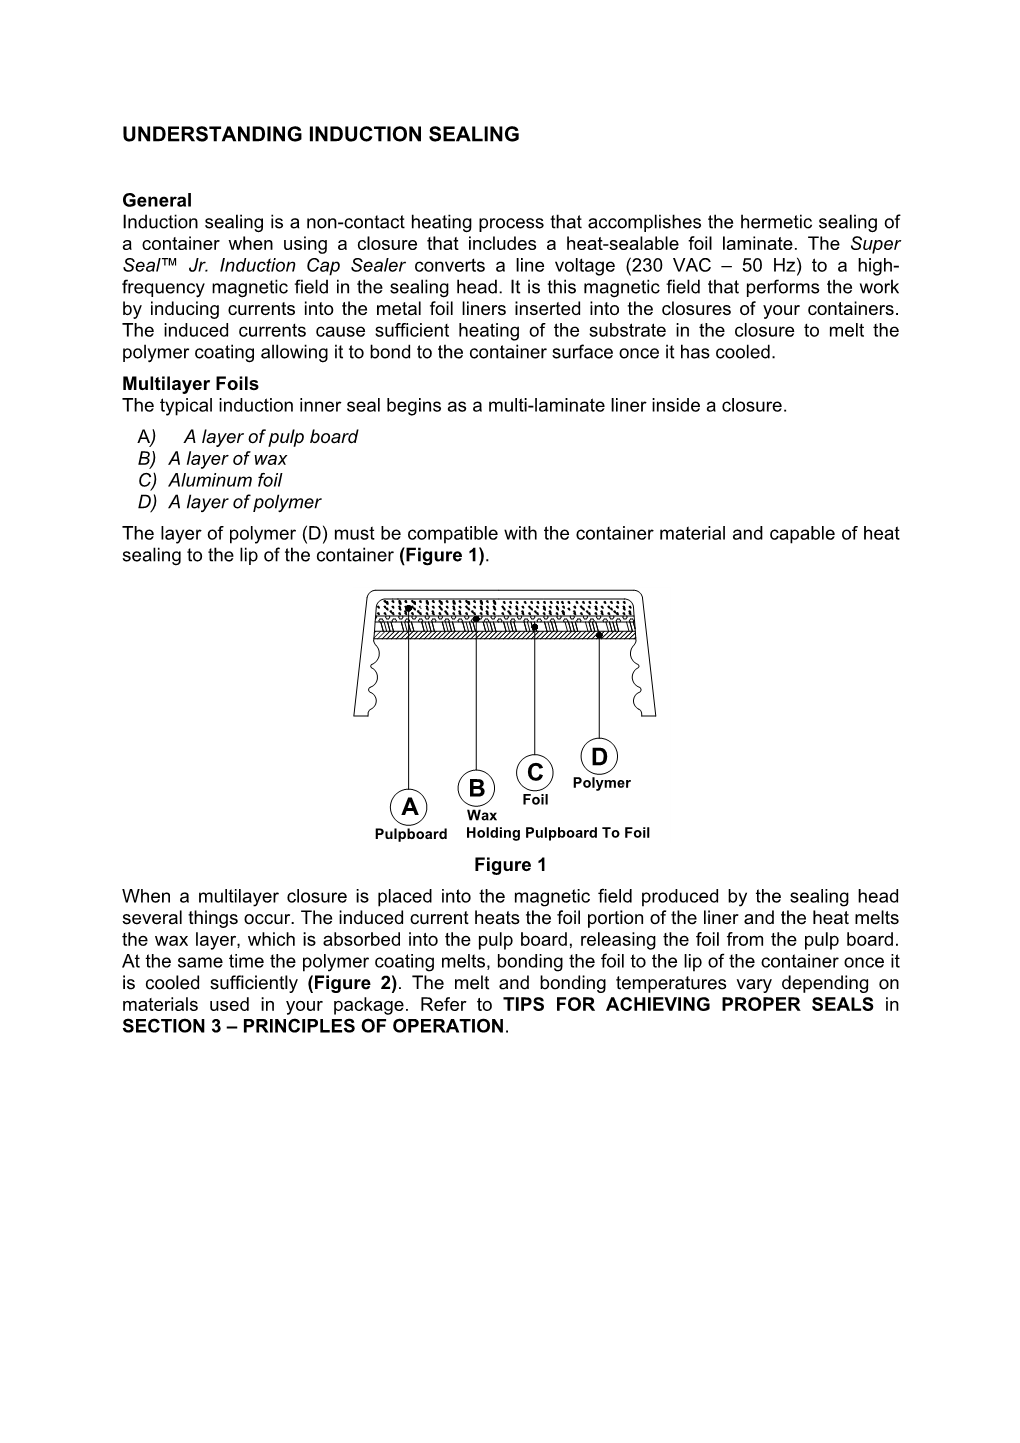 Understanding How Induction Sealing Works